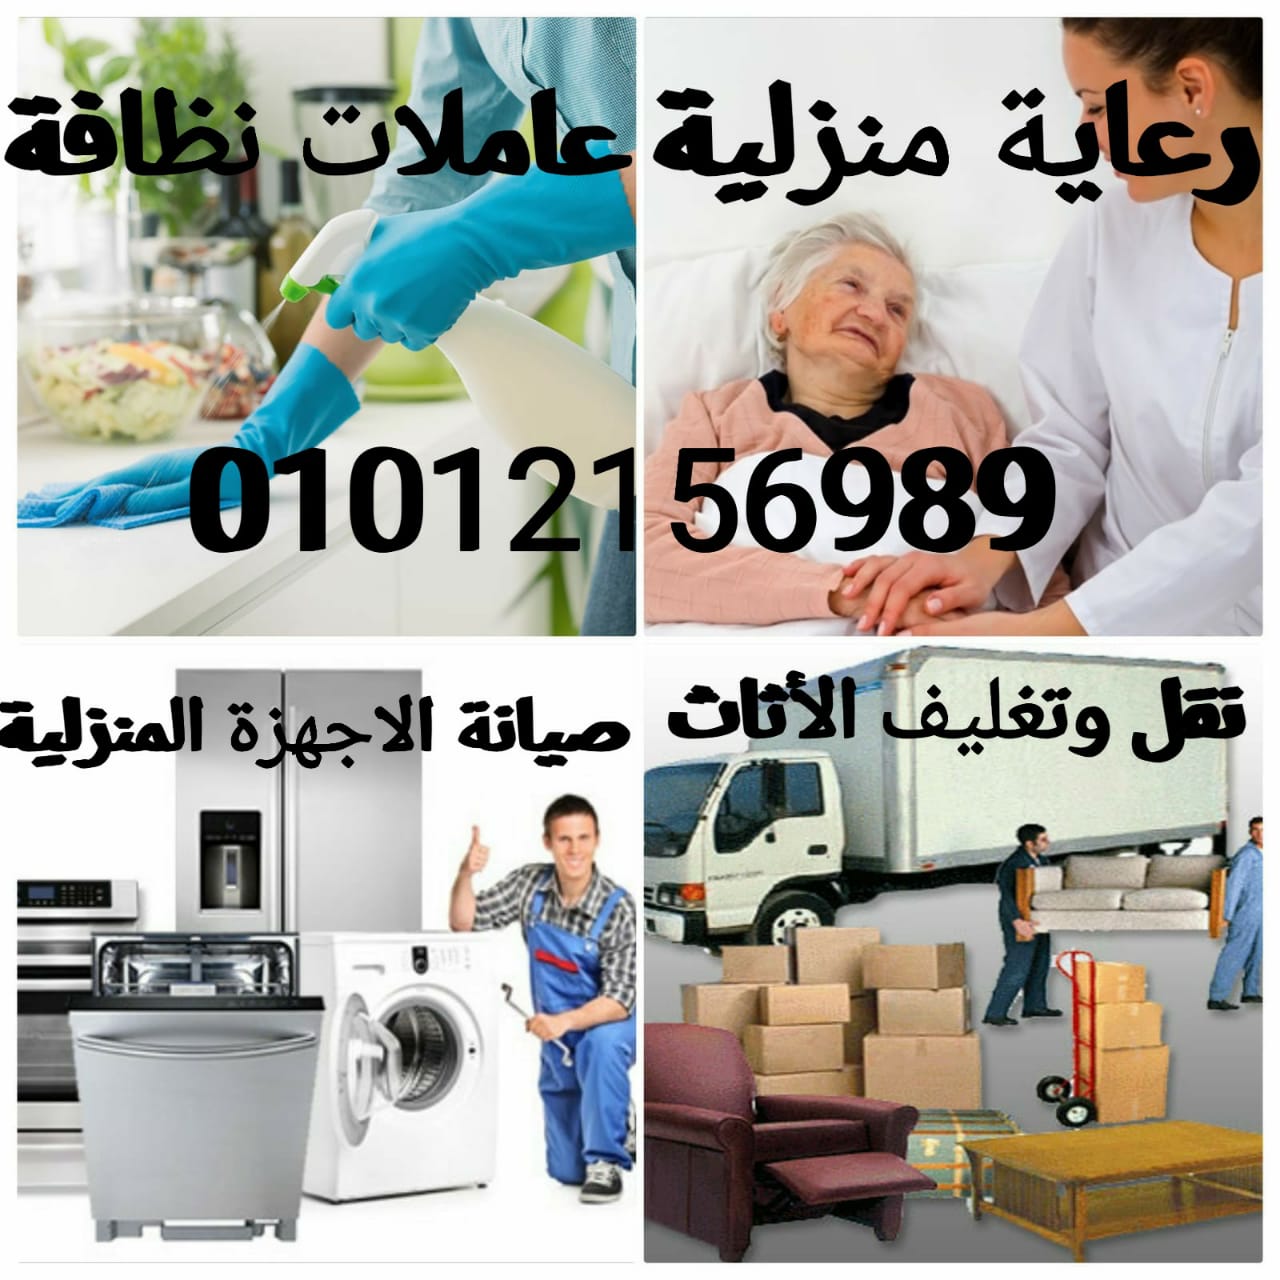 ALjawhara Home Services